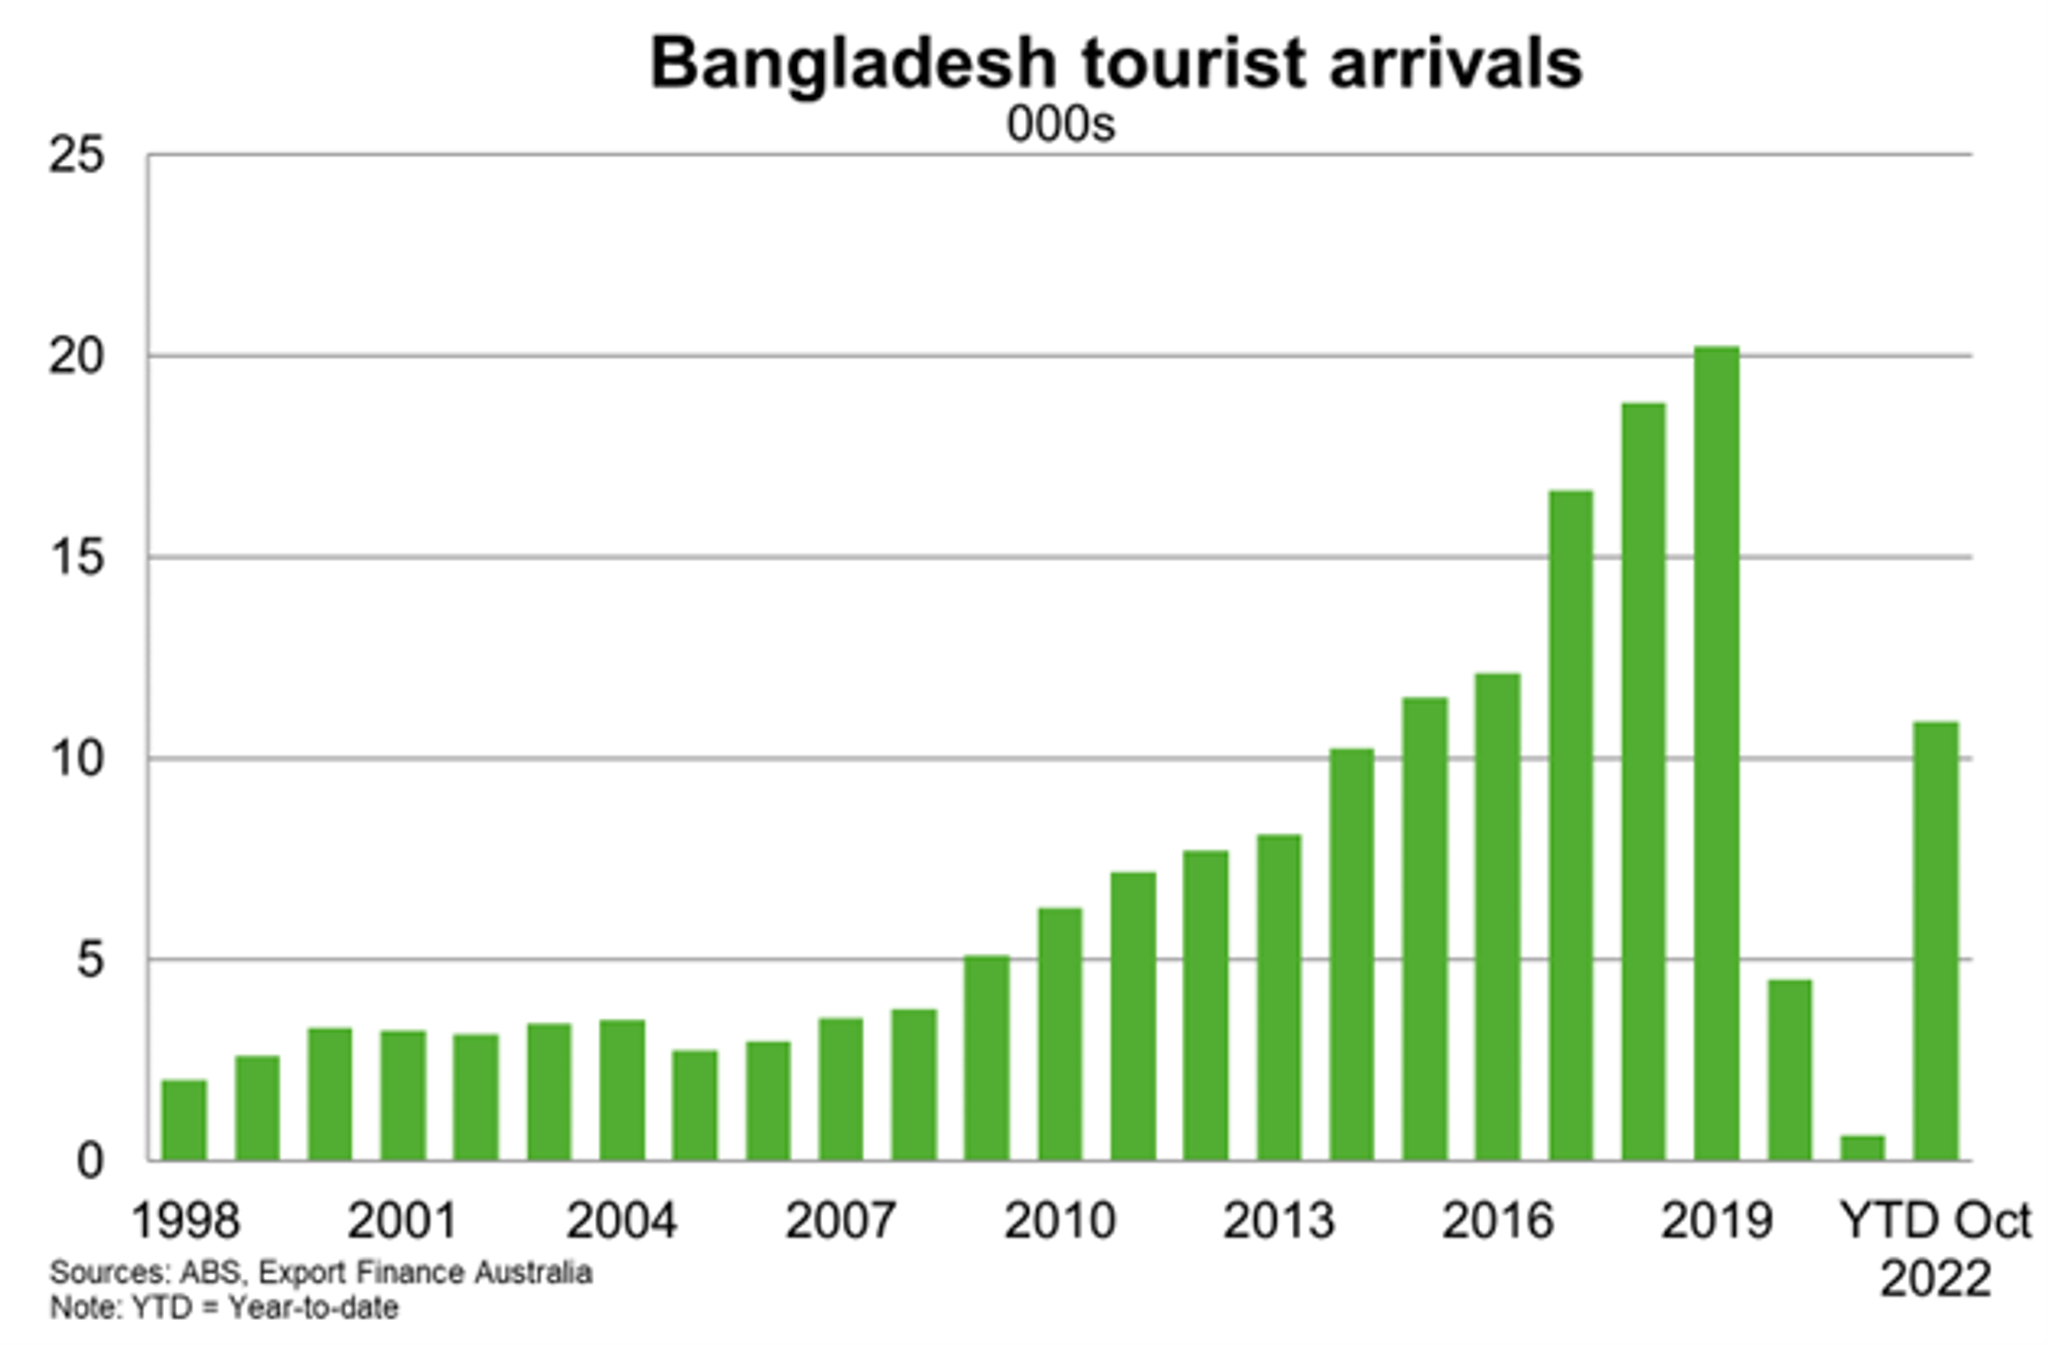 Bangladesh 8